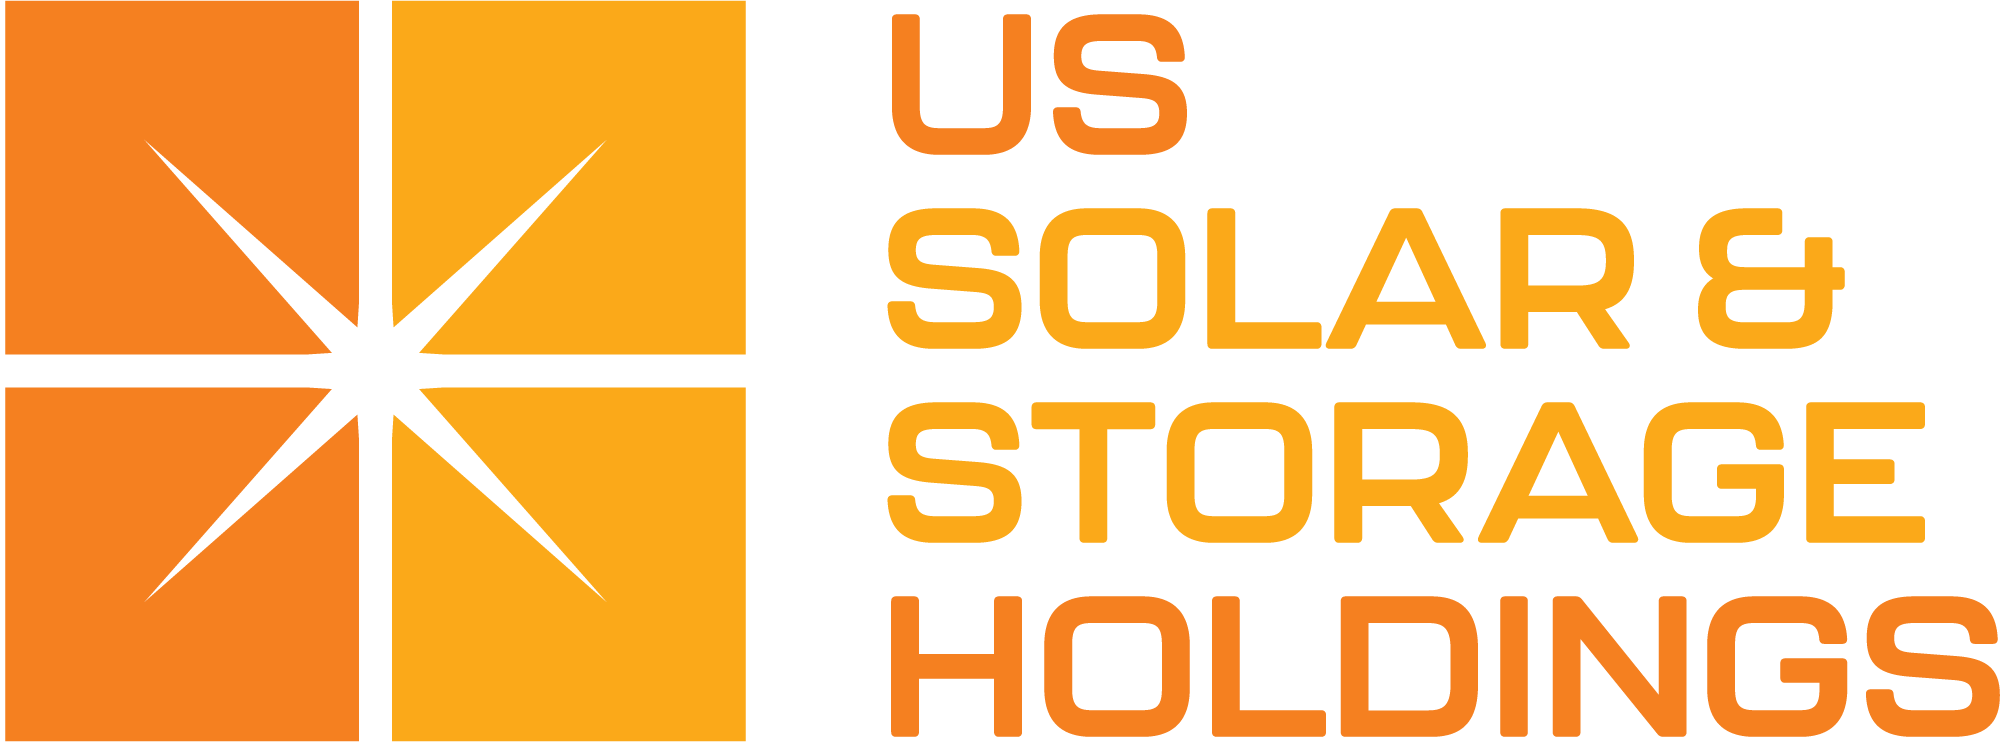 US Solar & Storage Holdings